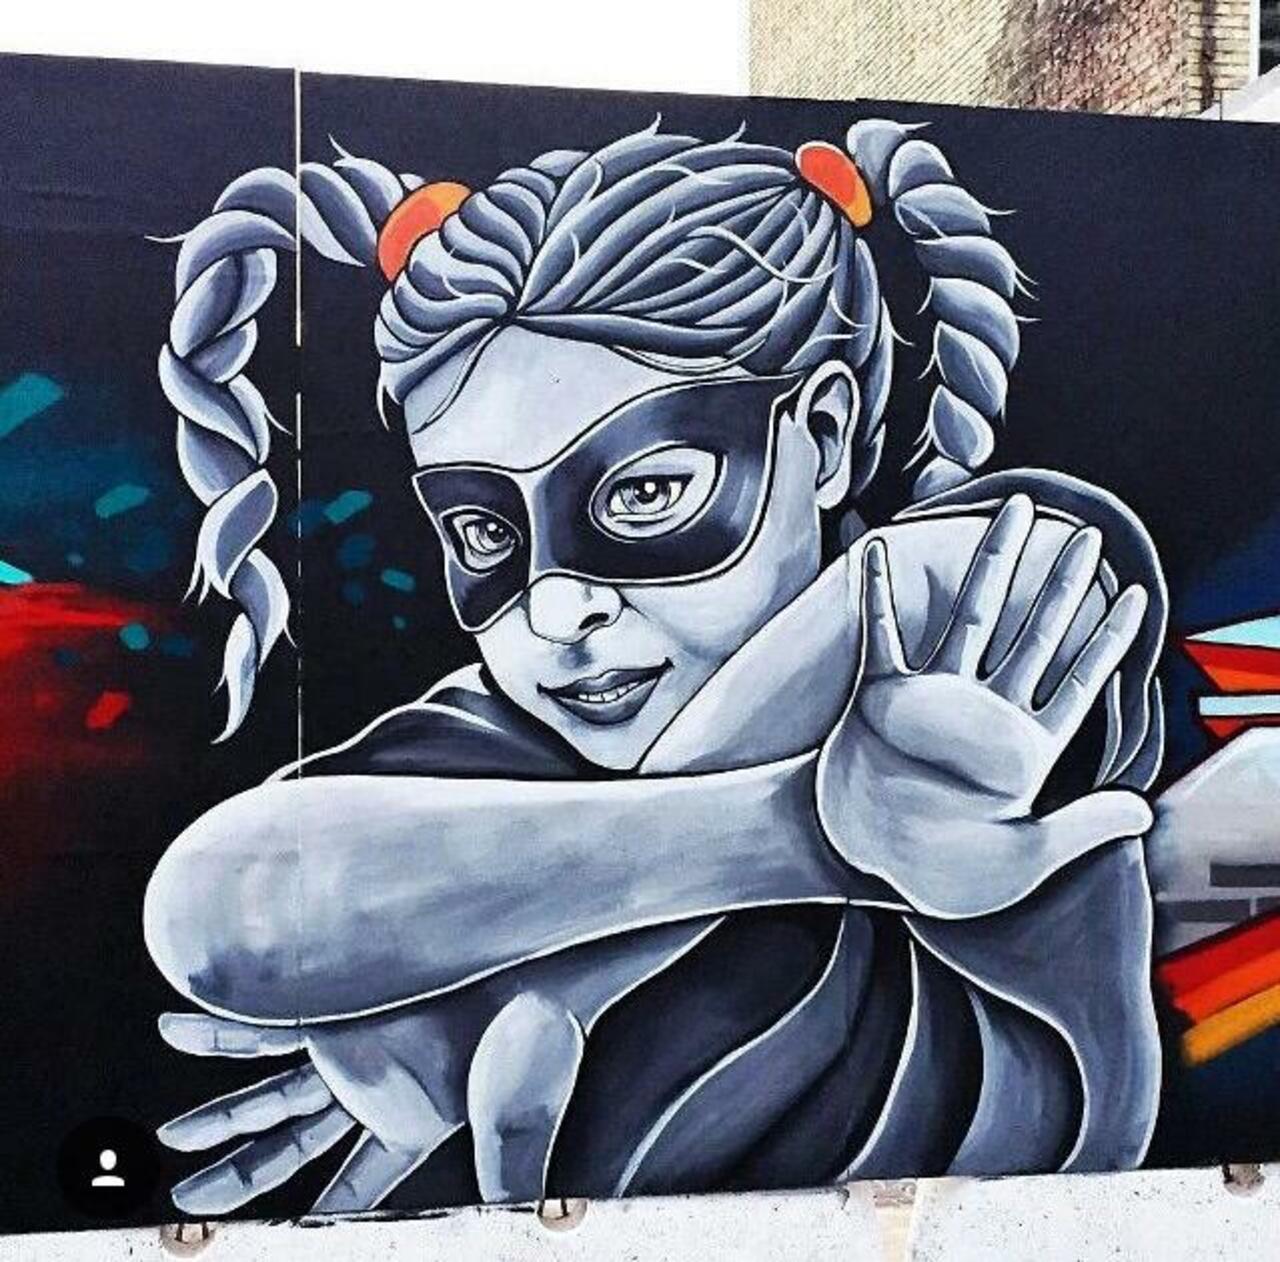 RT belilac "RT belilac "Street Art by Stinehvid 

#art #graffiti #mural #streetart http://t.co/HgV0qG5l1Y""